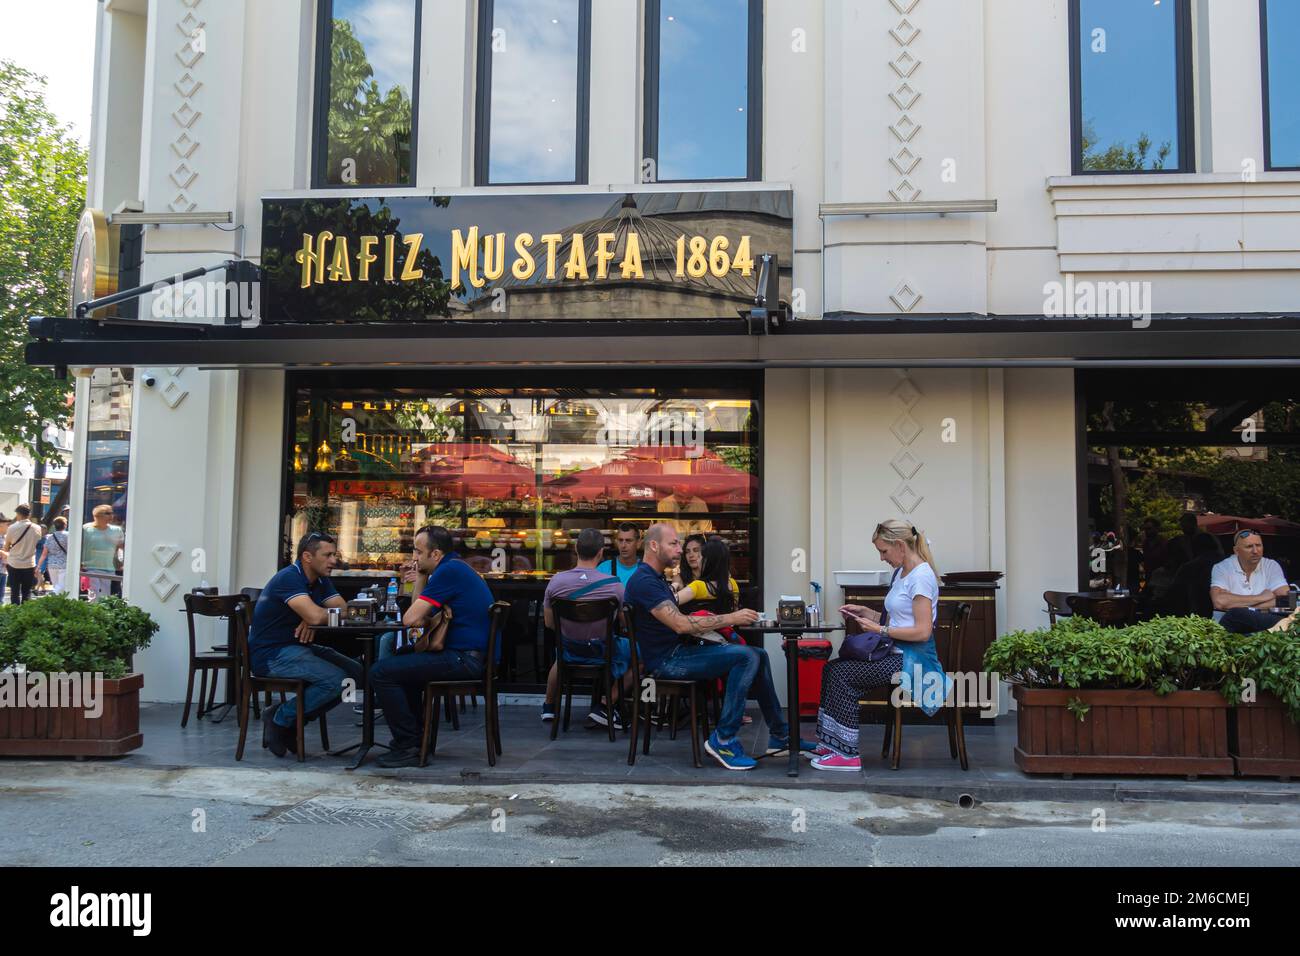 Istanbul historic cafe. Hakkı Zade Hafiz Mustafa 1864 - Pastry shop and cafe in Fatih, Istanbul, Turkey Stock Photo